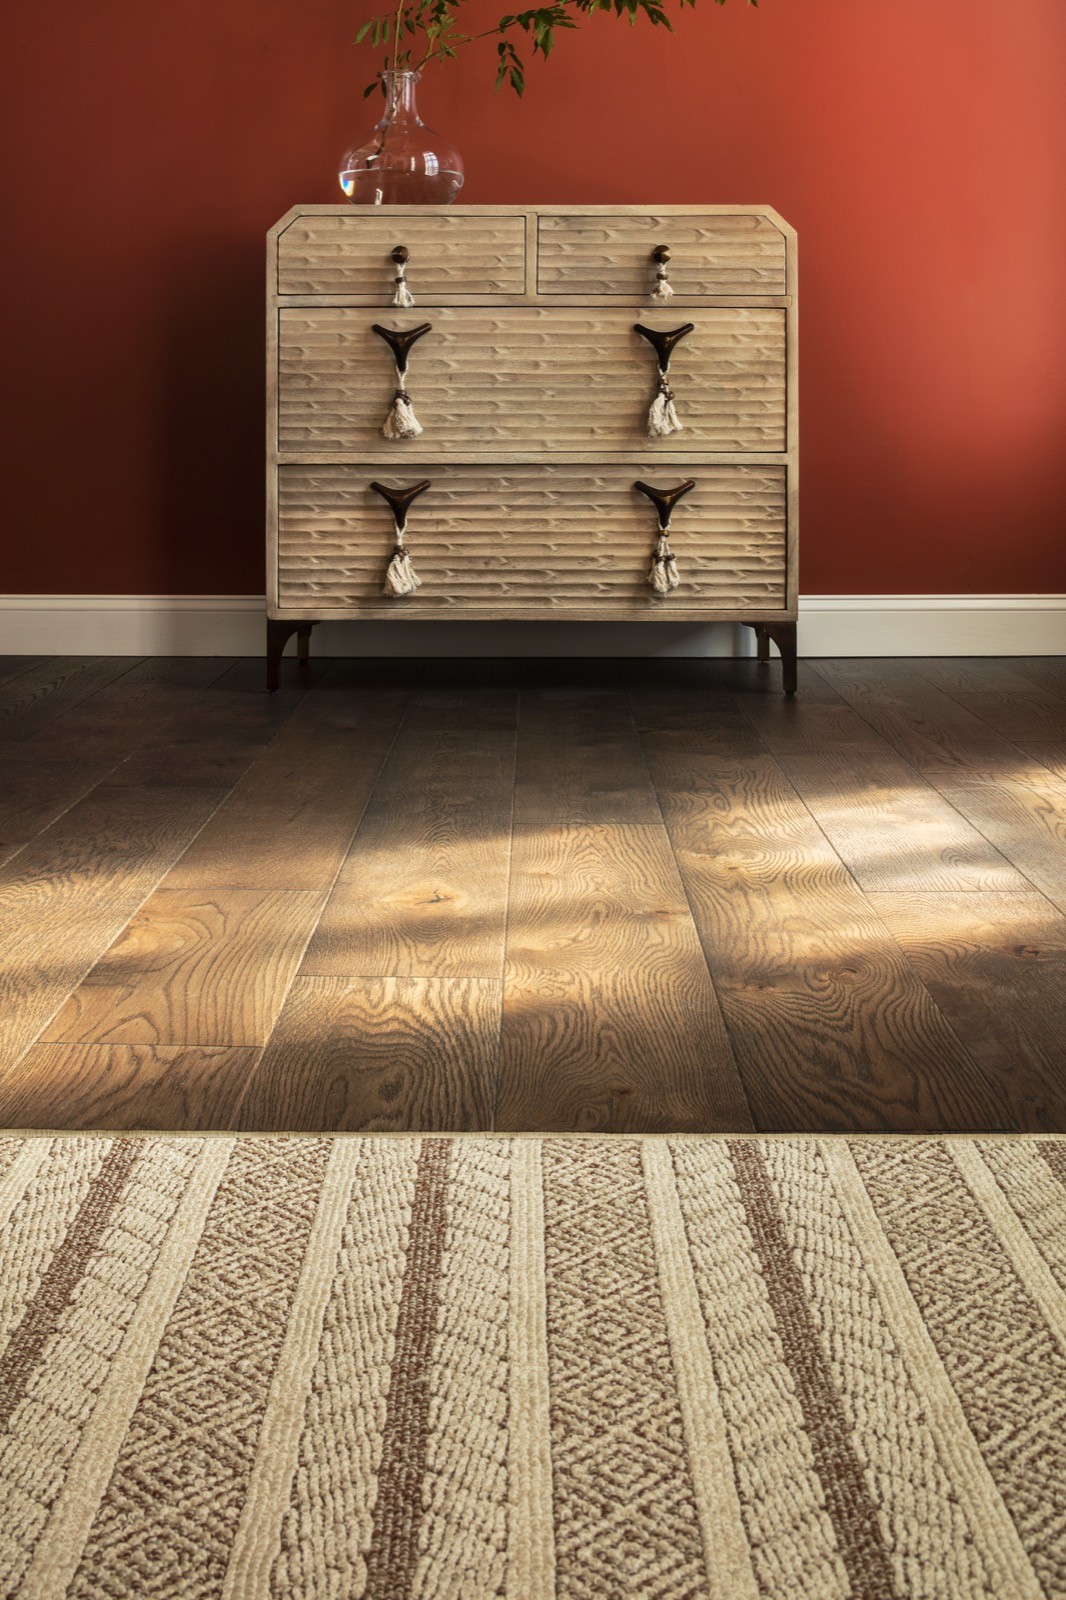 Buckingham flooring | Pierce Carpet Mill Outlet